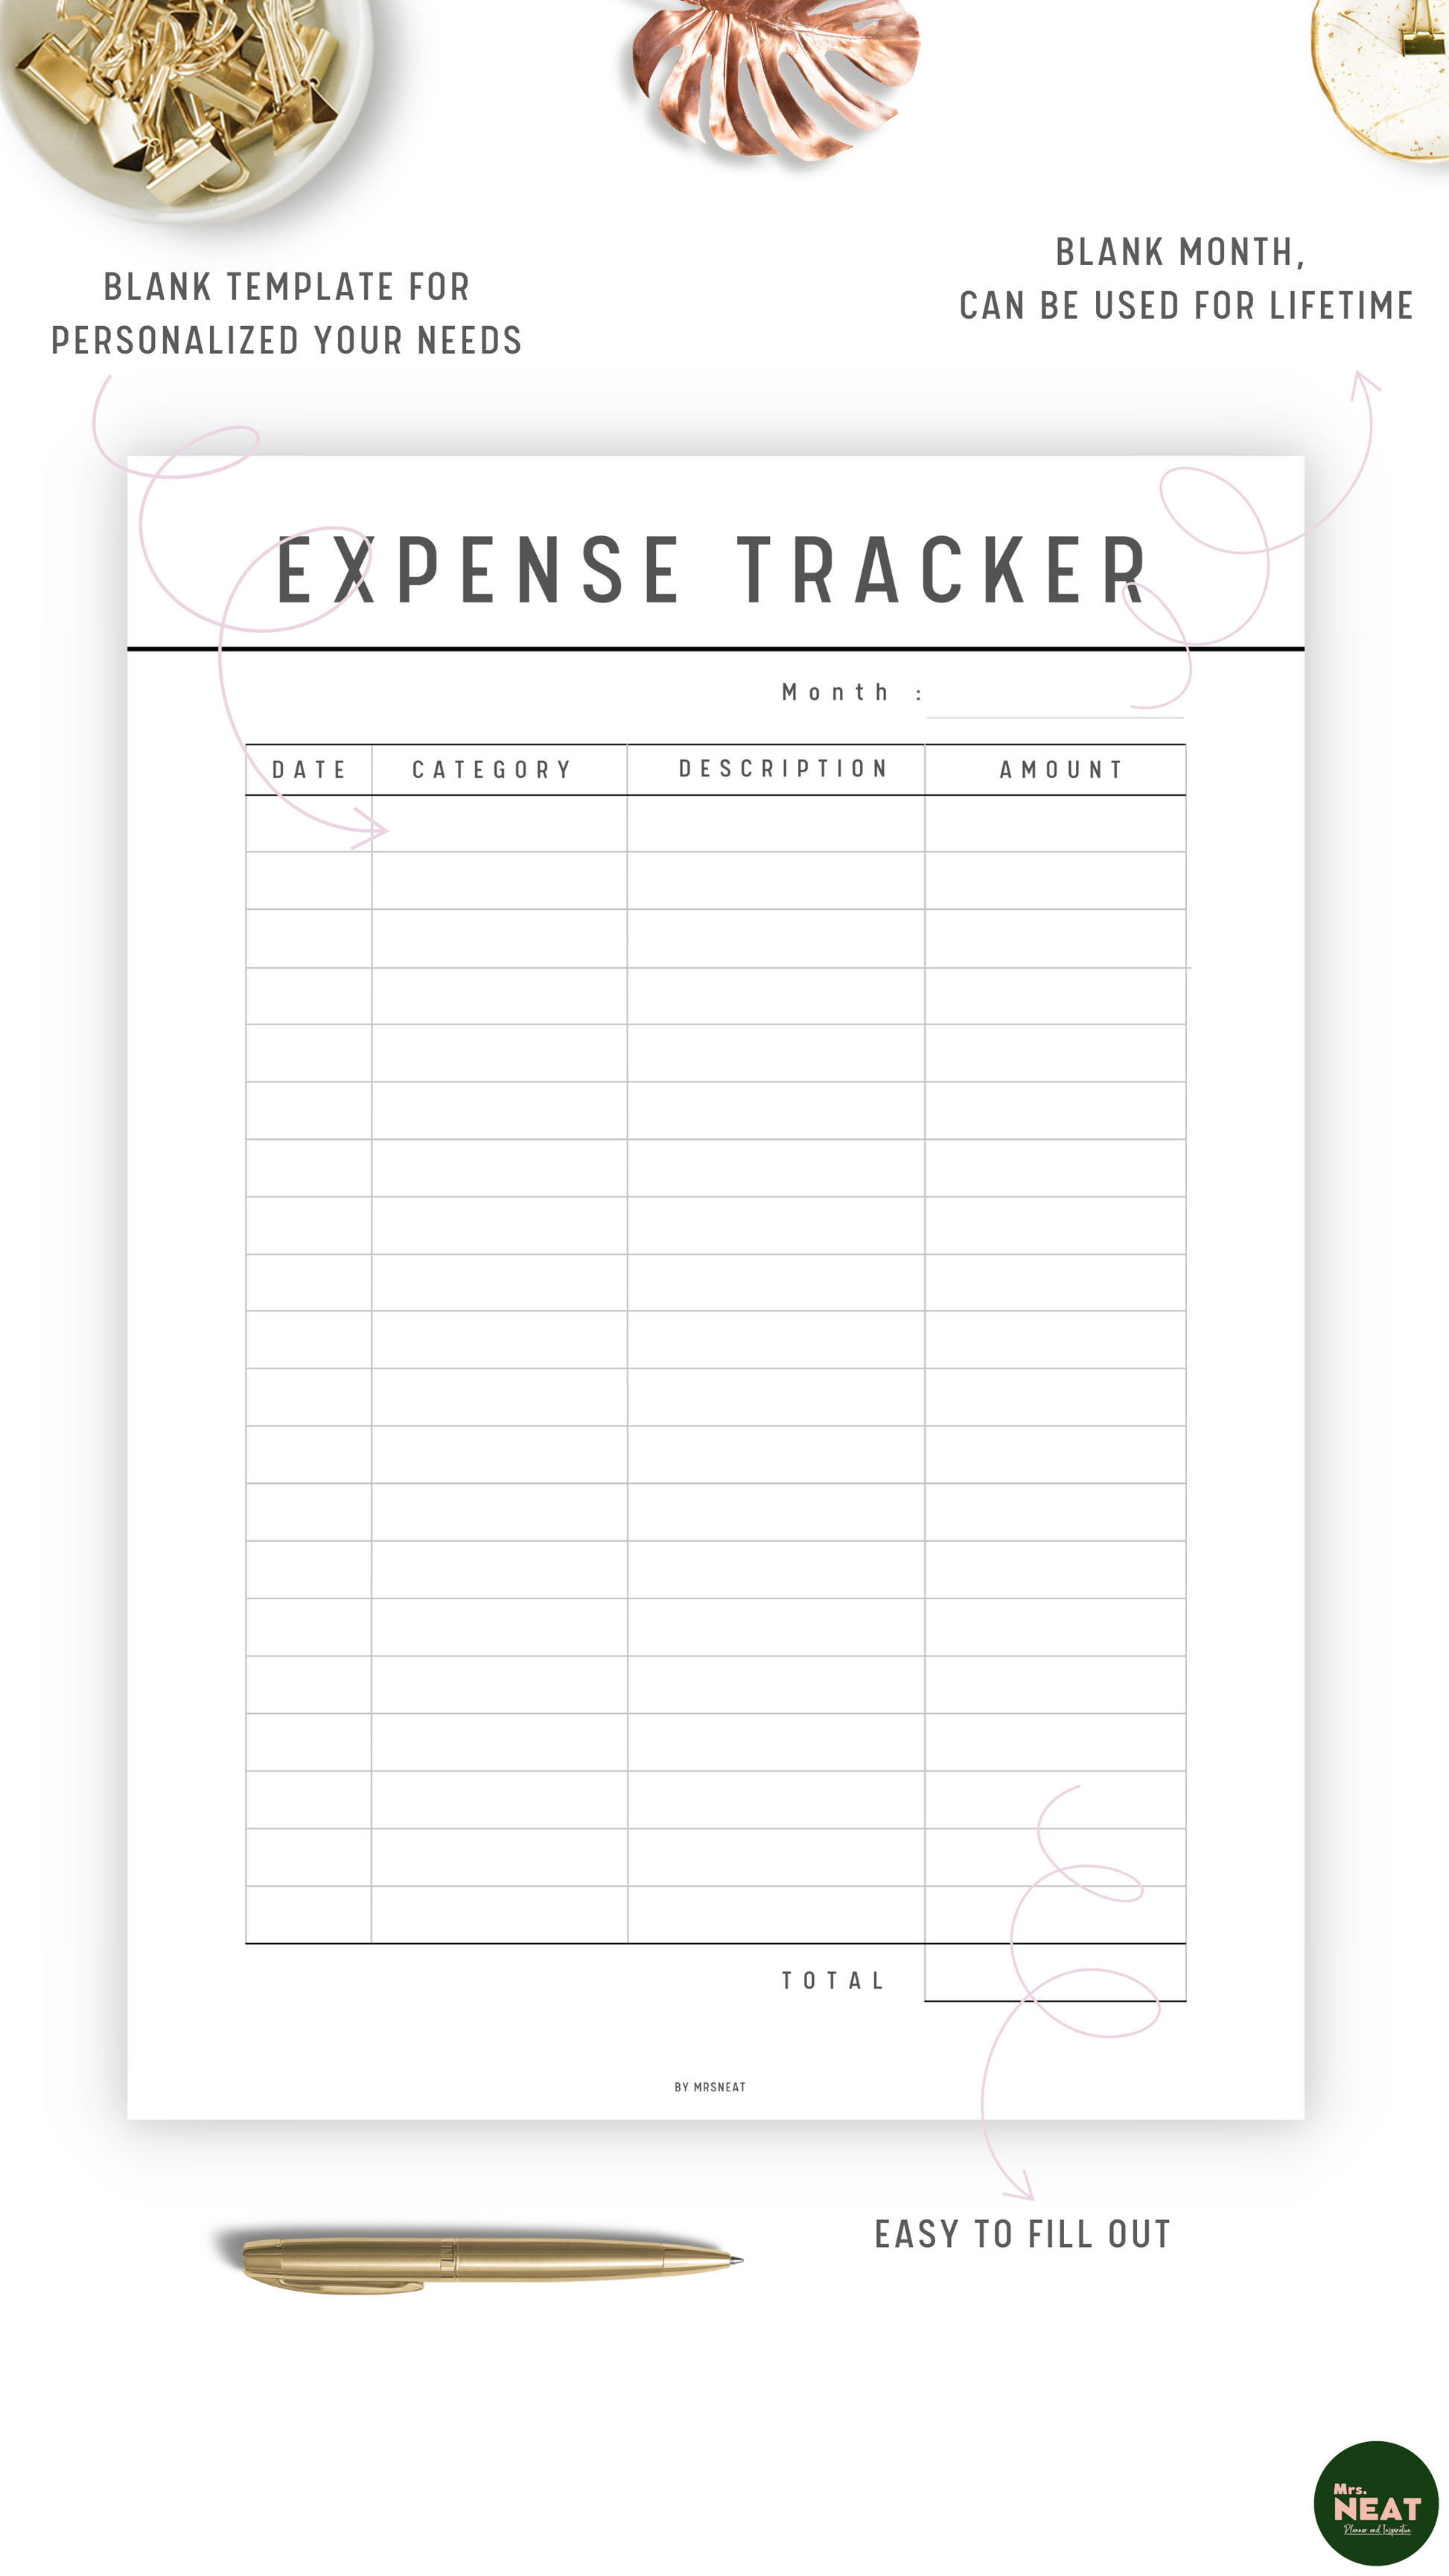 Expense Tracker Printable